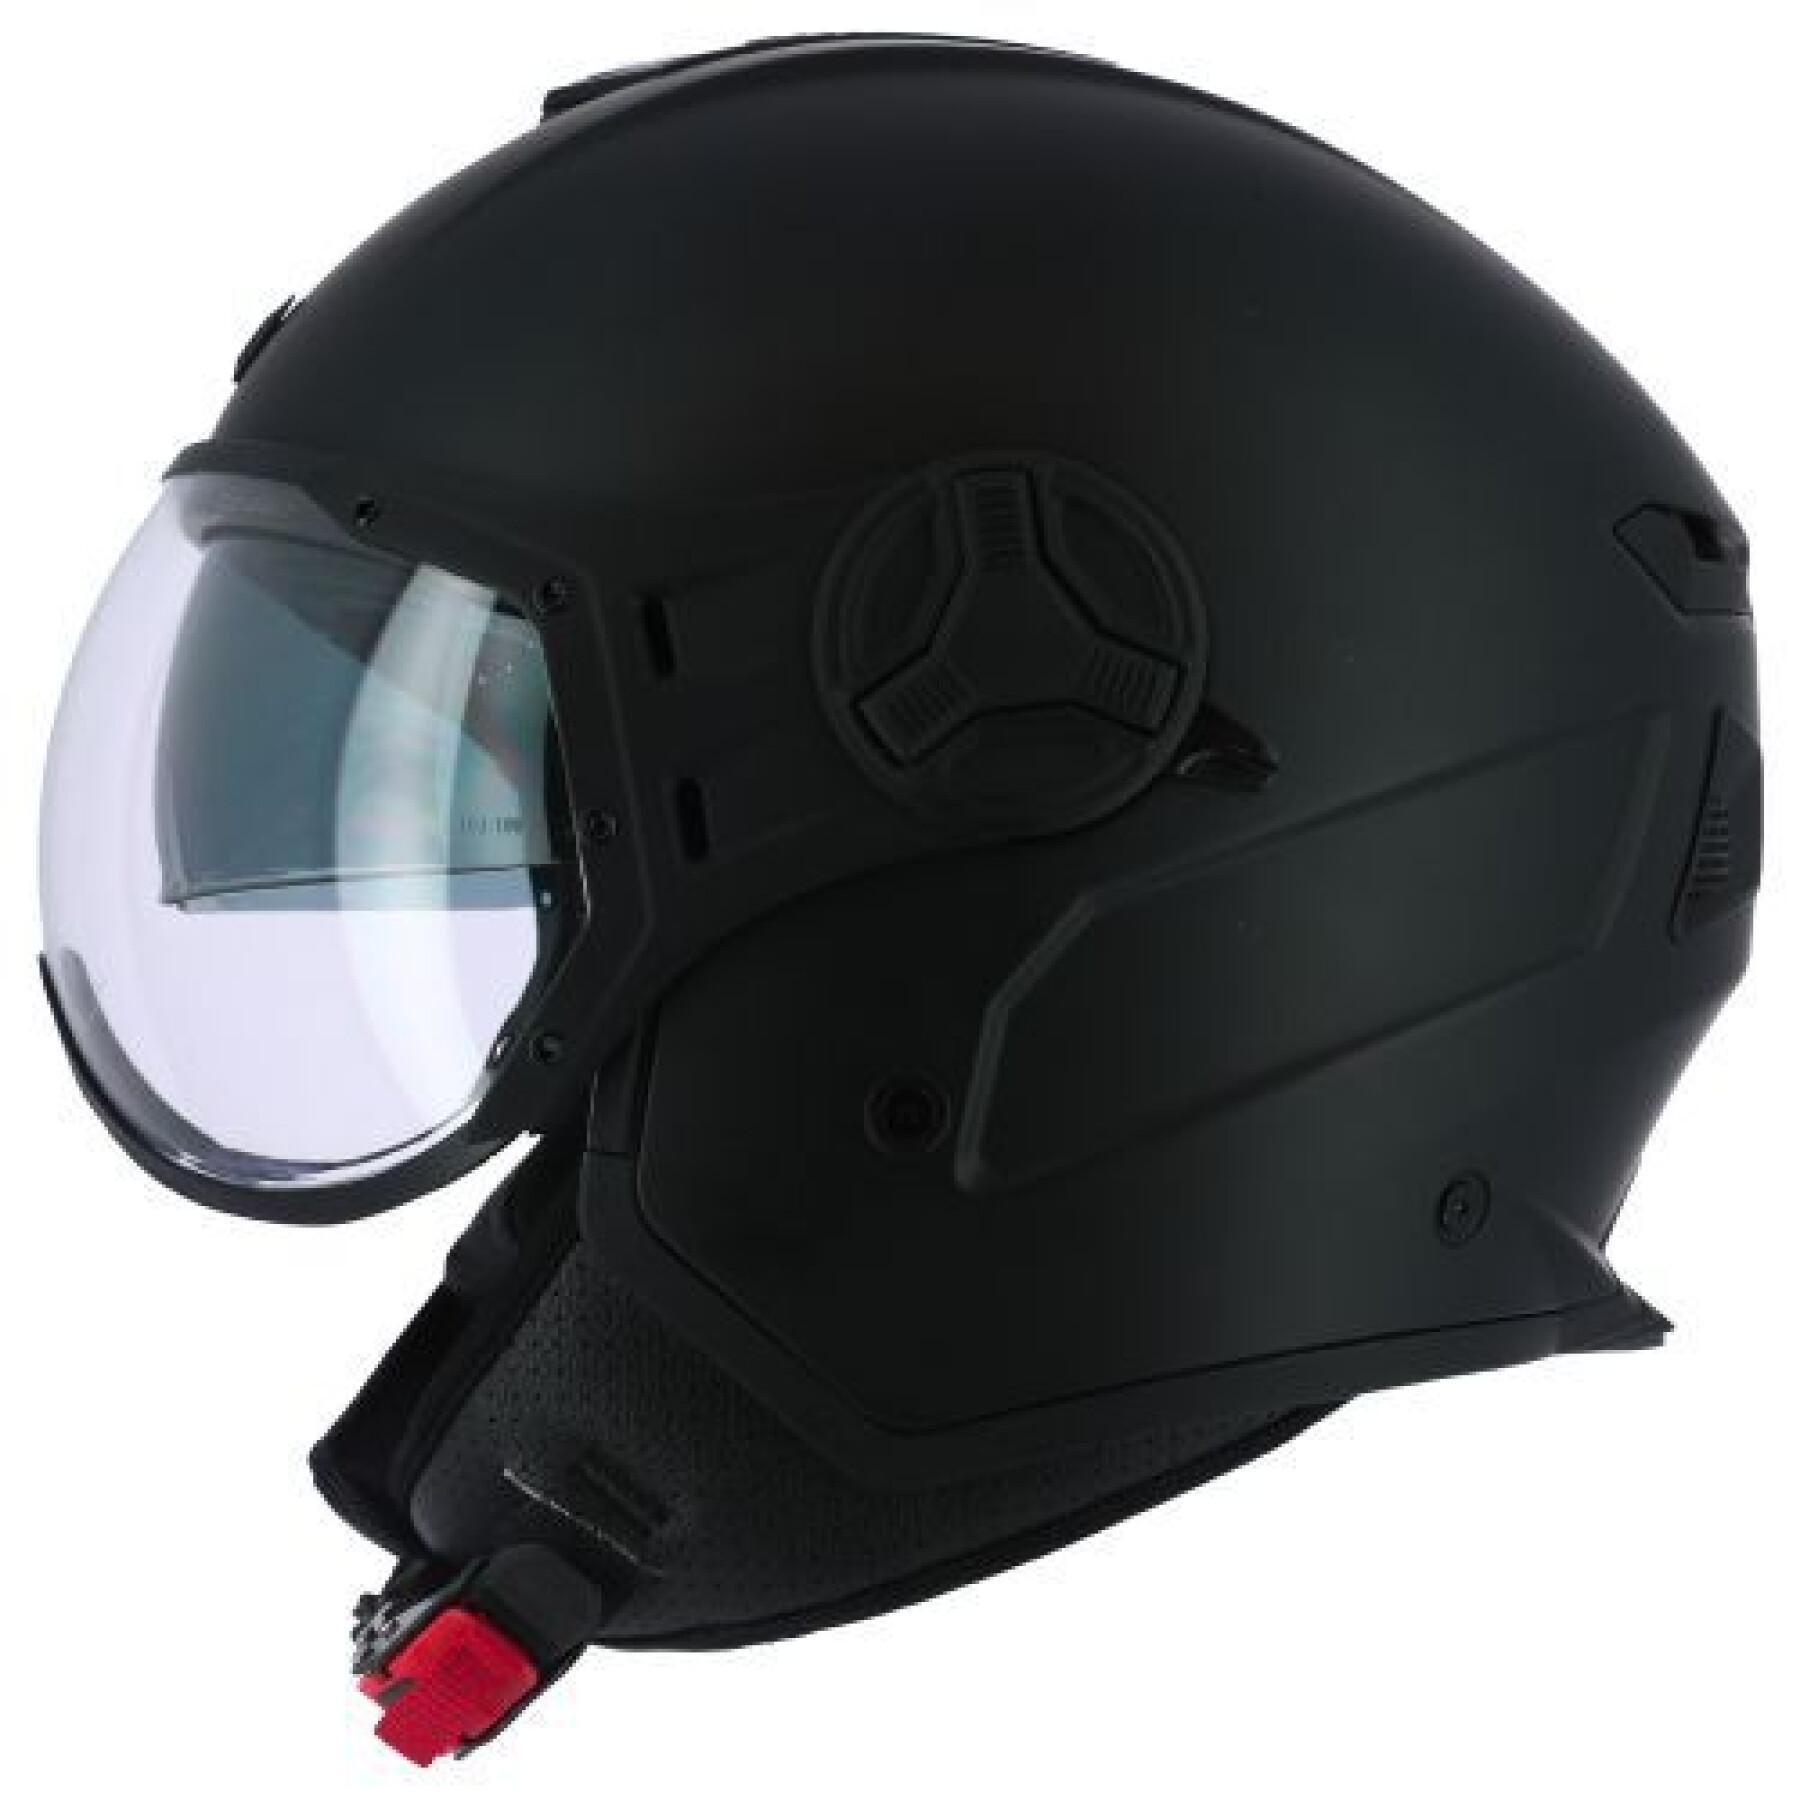 Motorcycle helmet jet Astone Minisport S6 Monocolor